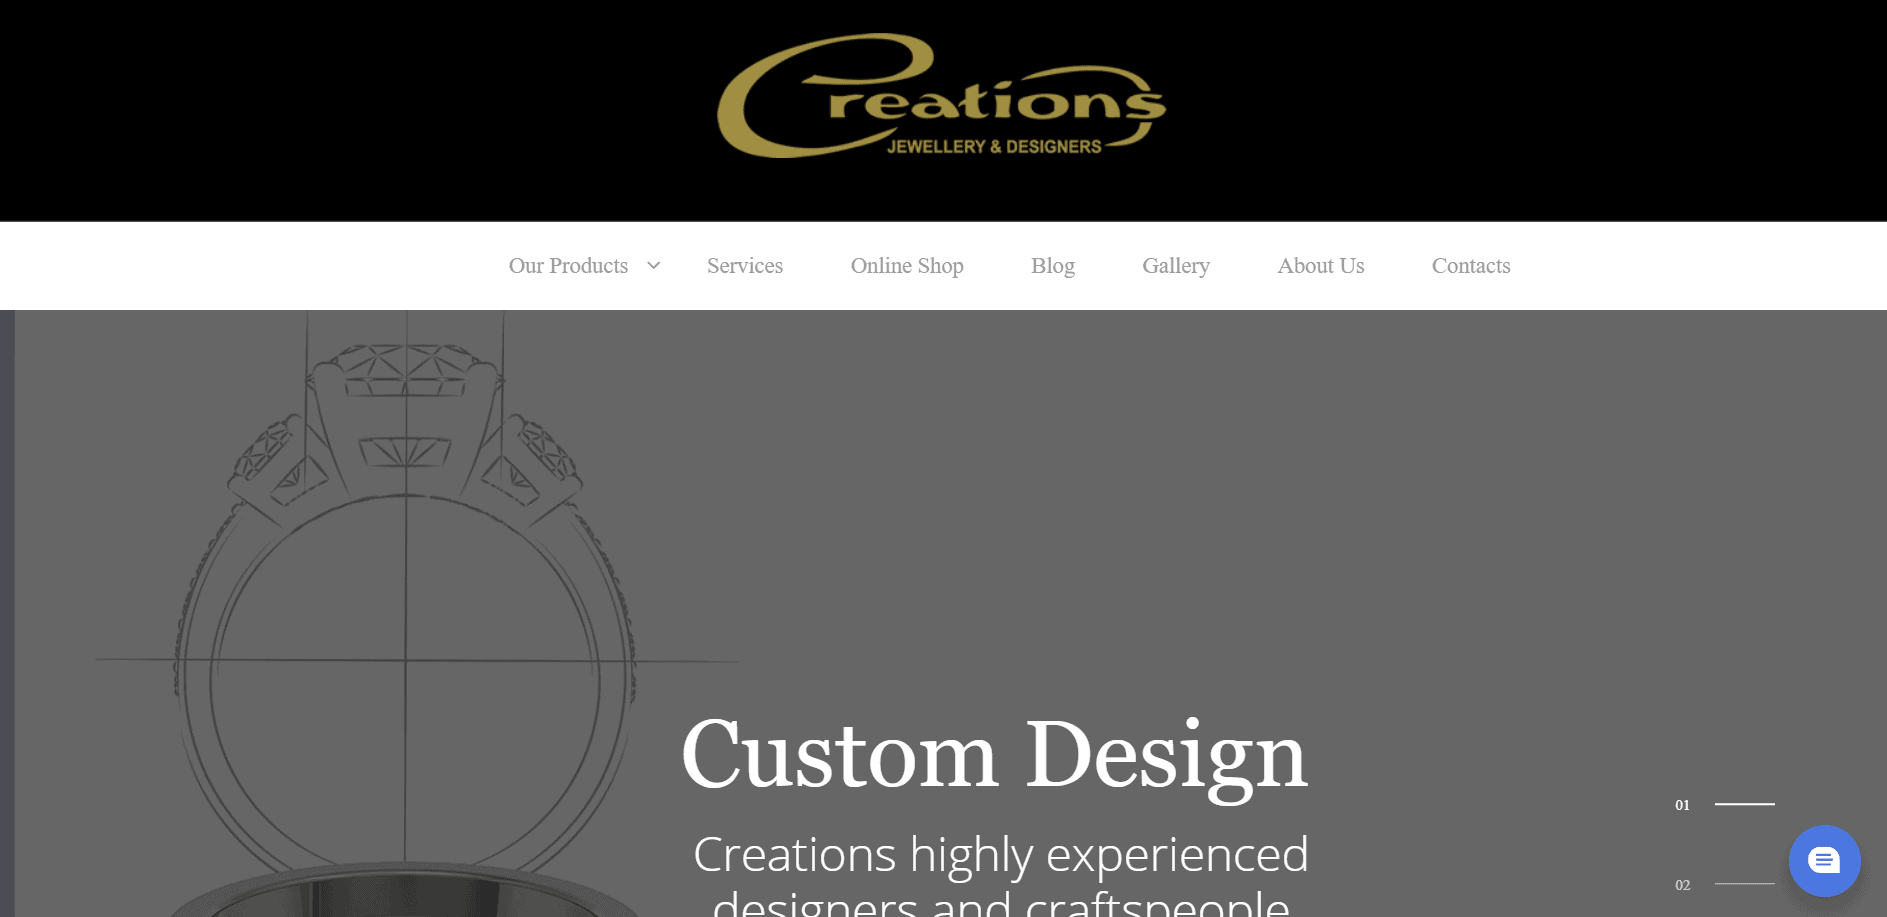 Creations Jewellery & Designers